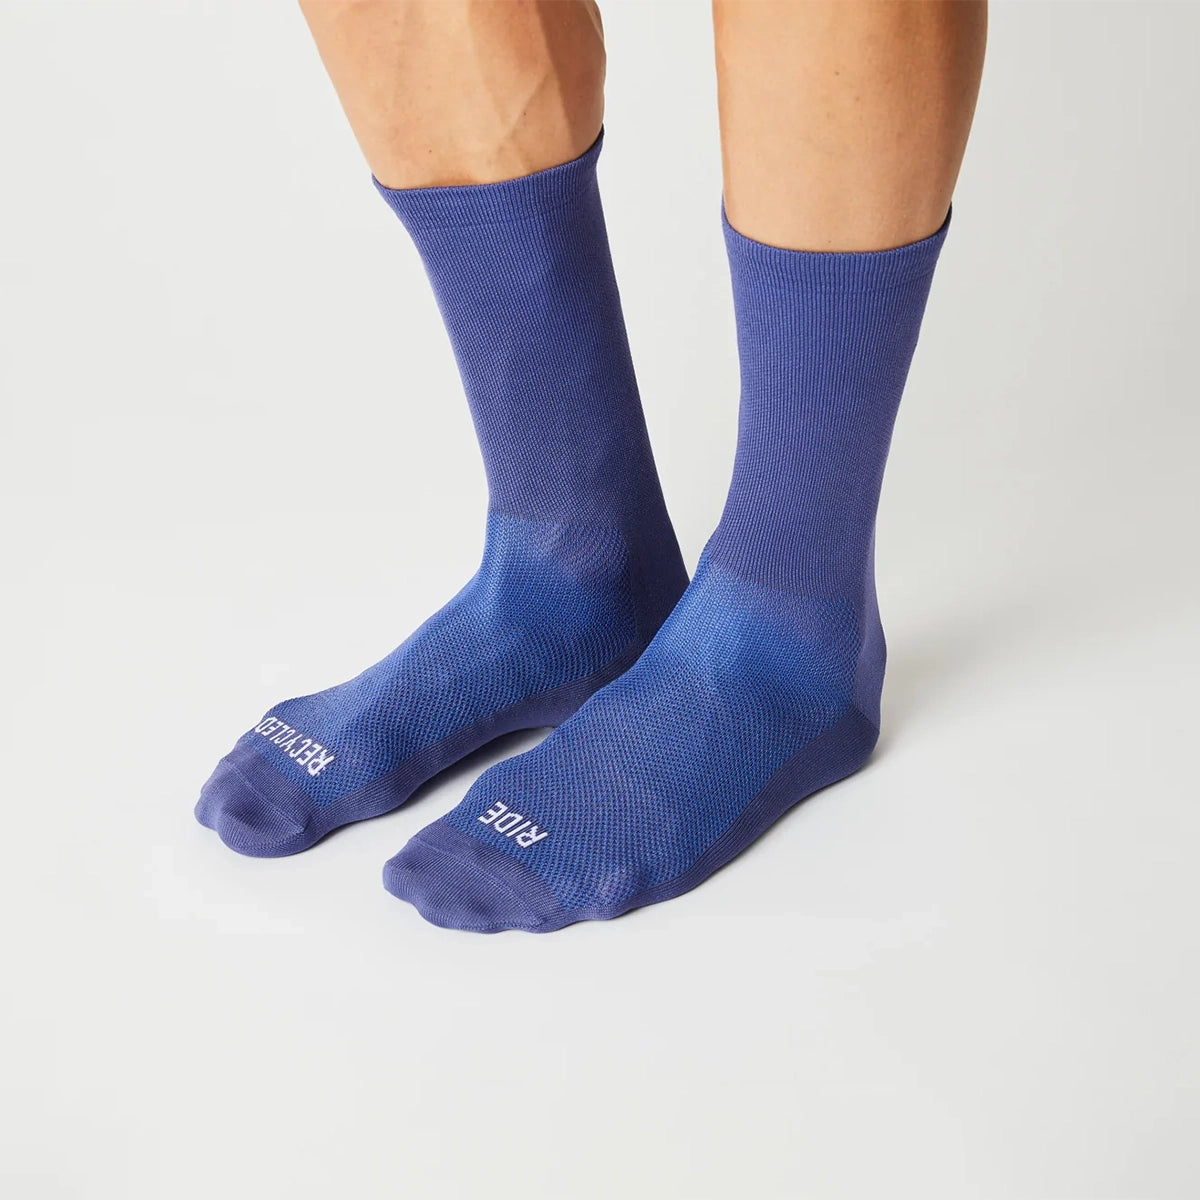 生態藍襪子 - 藍色星期一